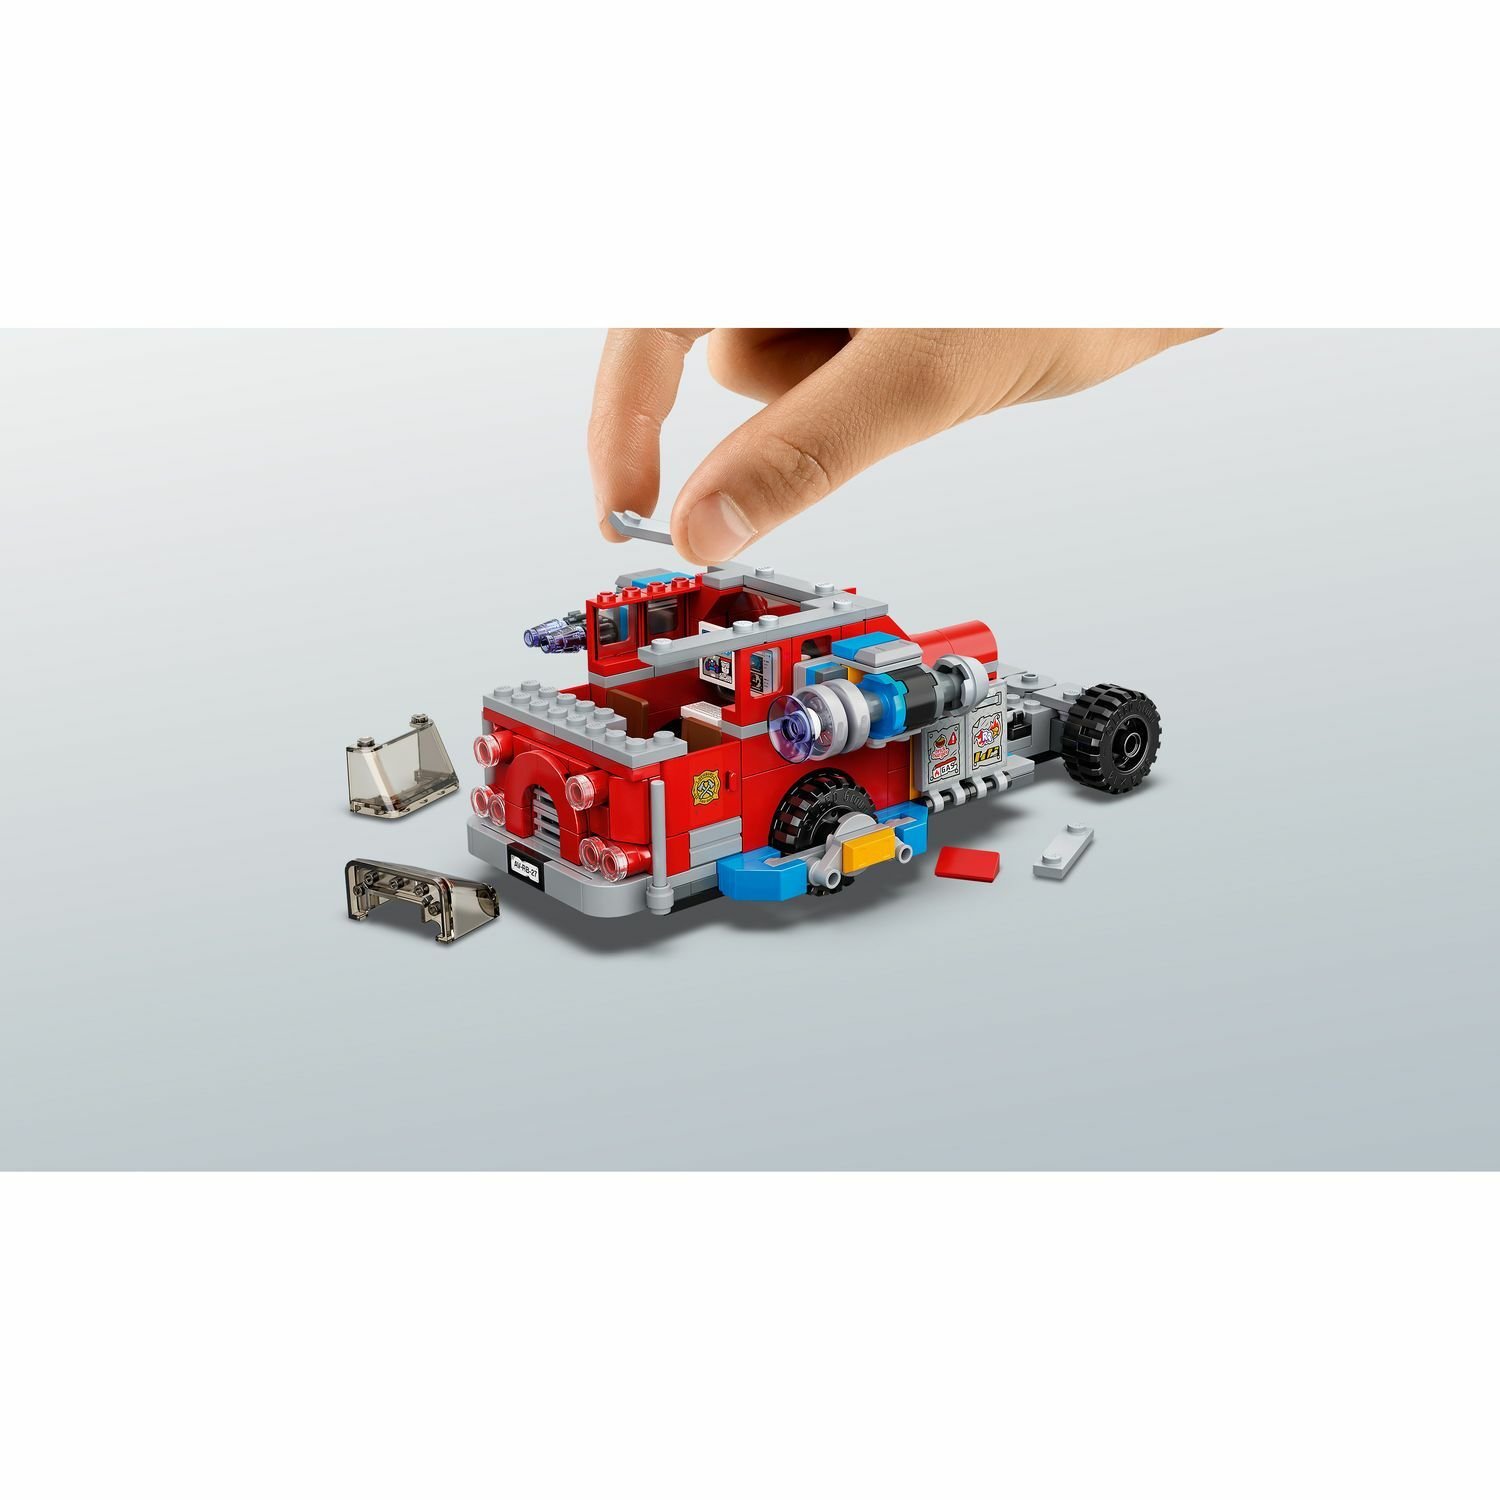 Lego Hidden Side 70436 Фантомная пожарная машина 3000